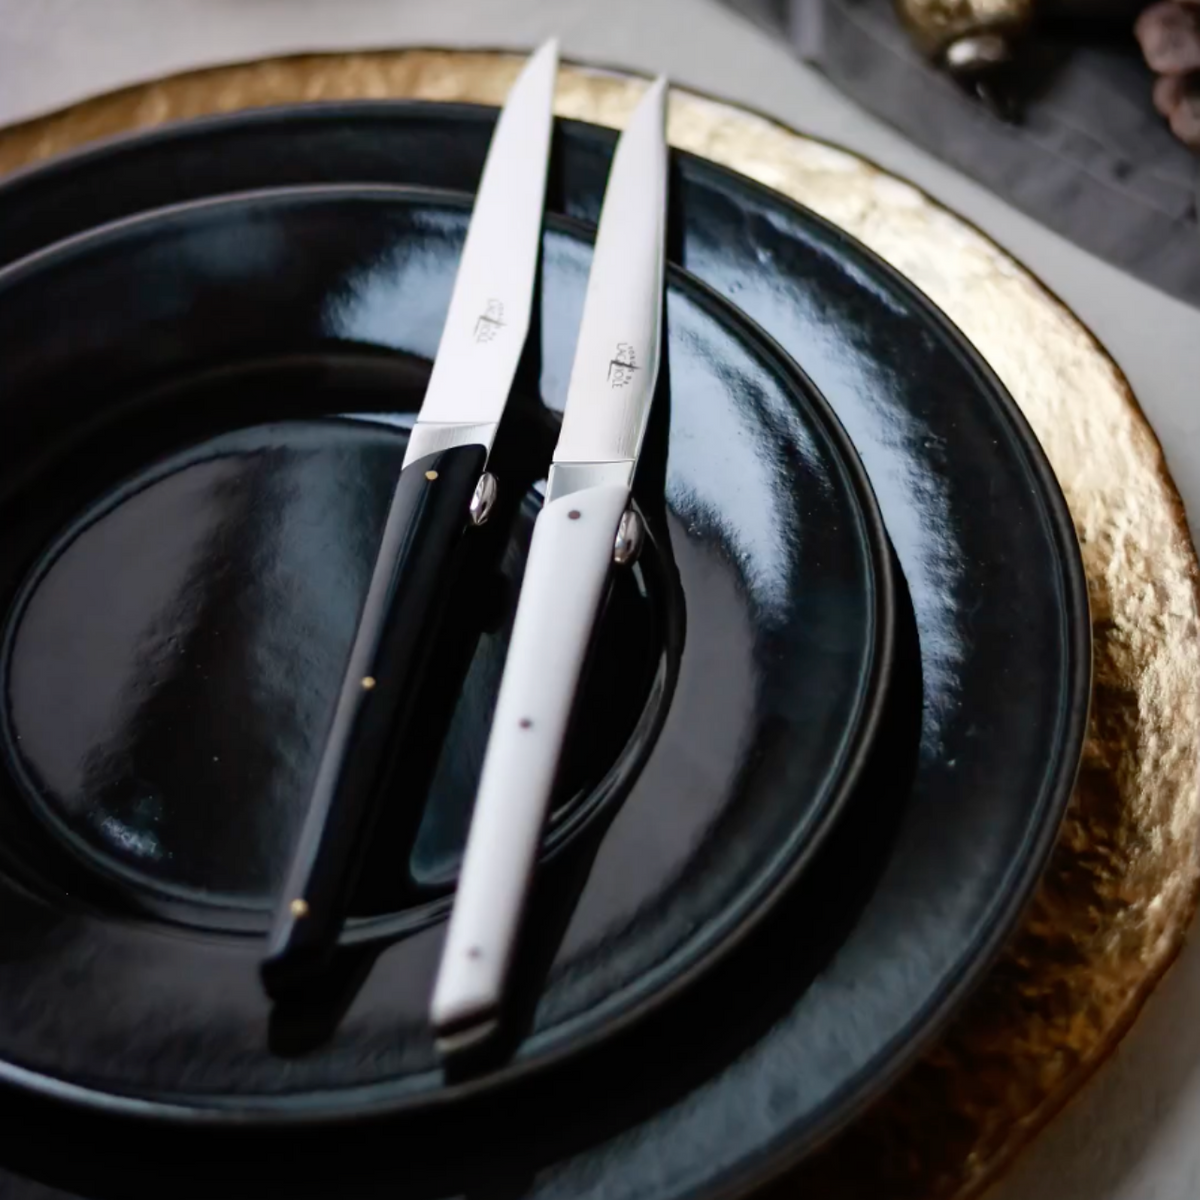 Olivier Gagnère Set of 6 Black Acrylic Steak Knives